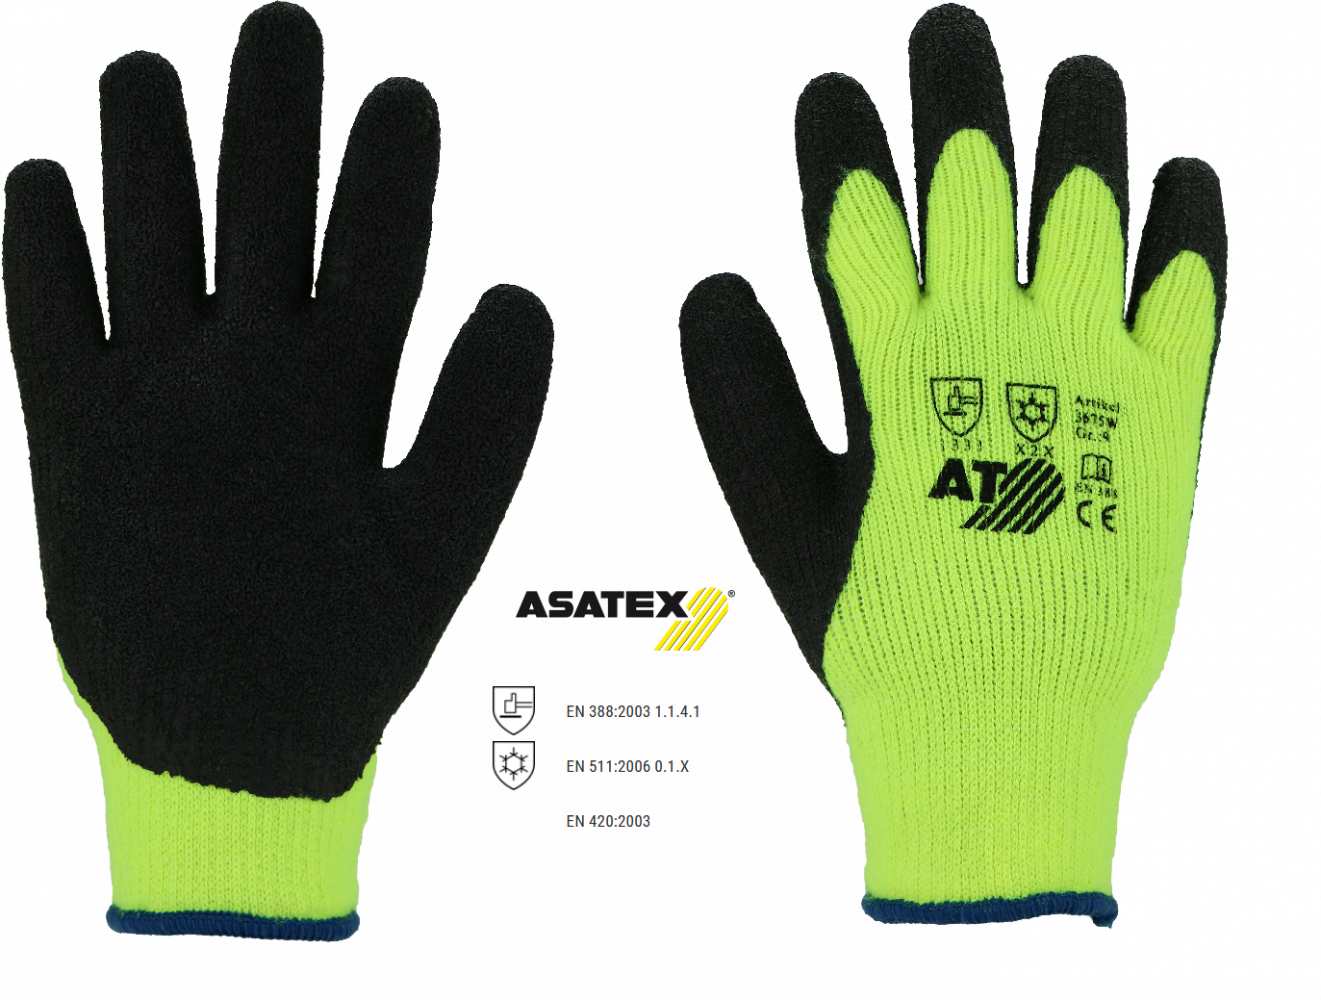 pics/Asatex/asatex-winter-gloves-3675w.png